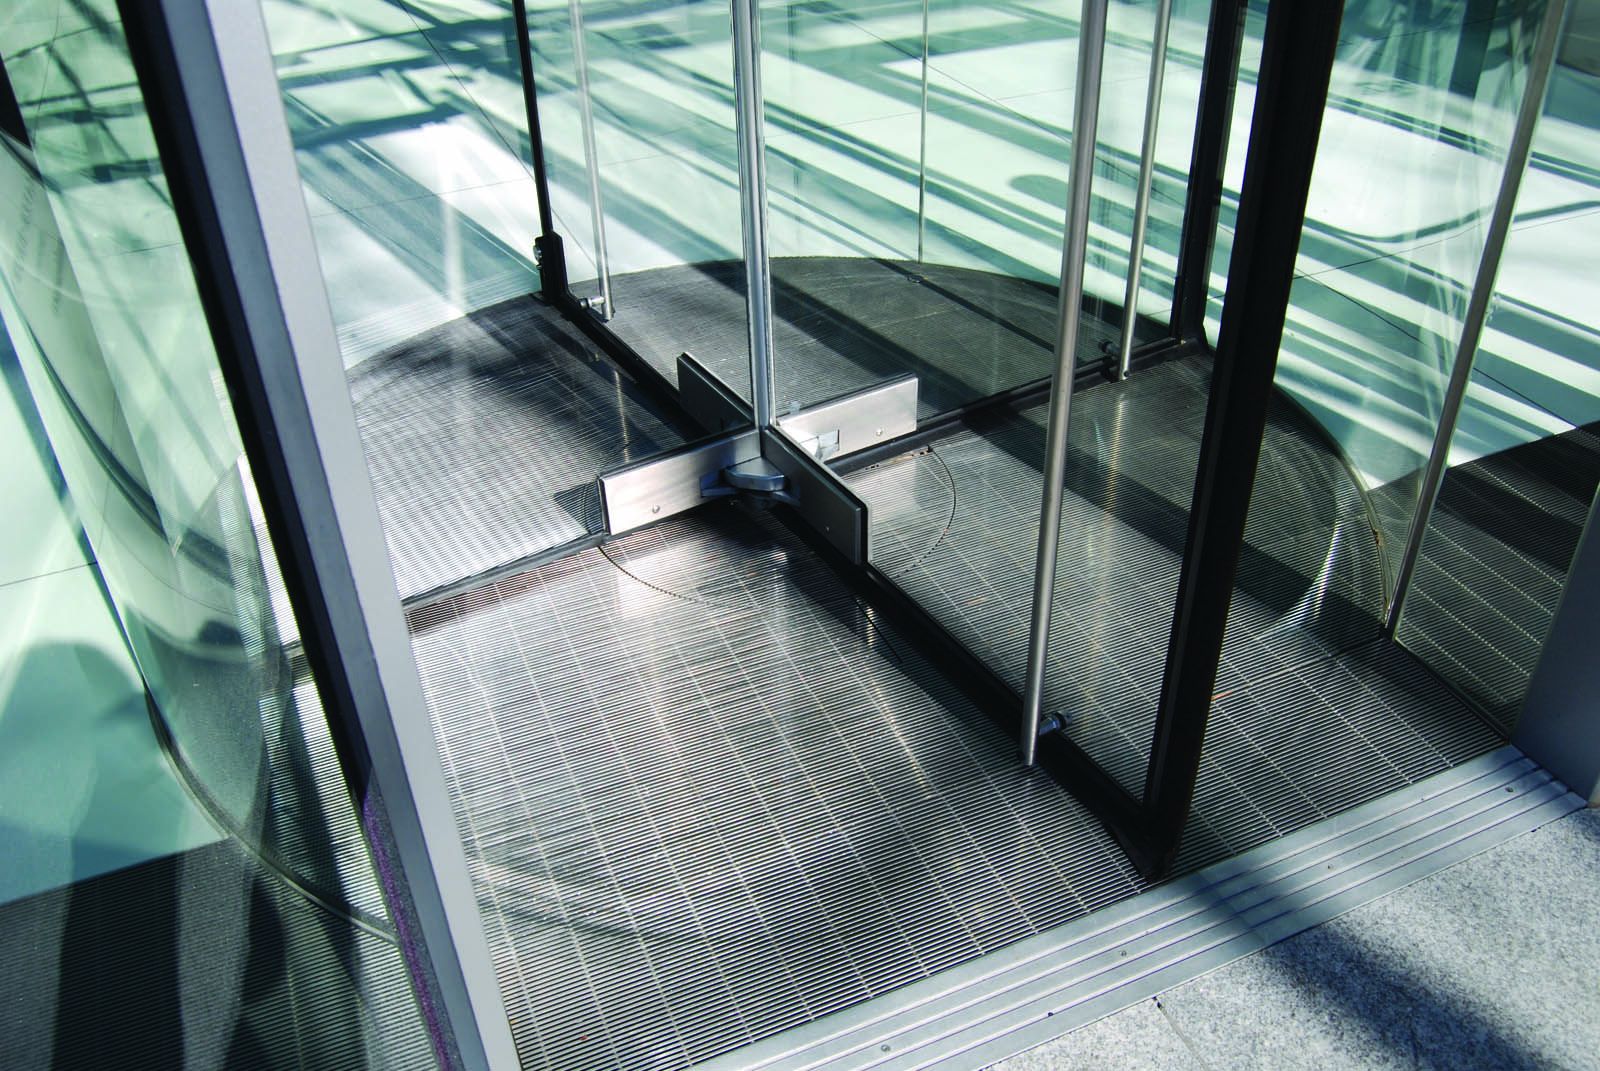 Entrance Flooring, Mats, Grid Systems